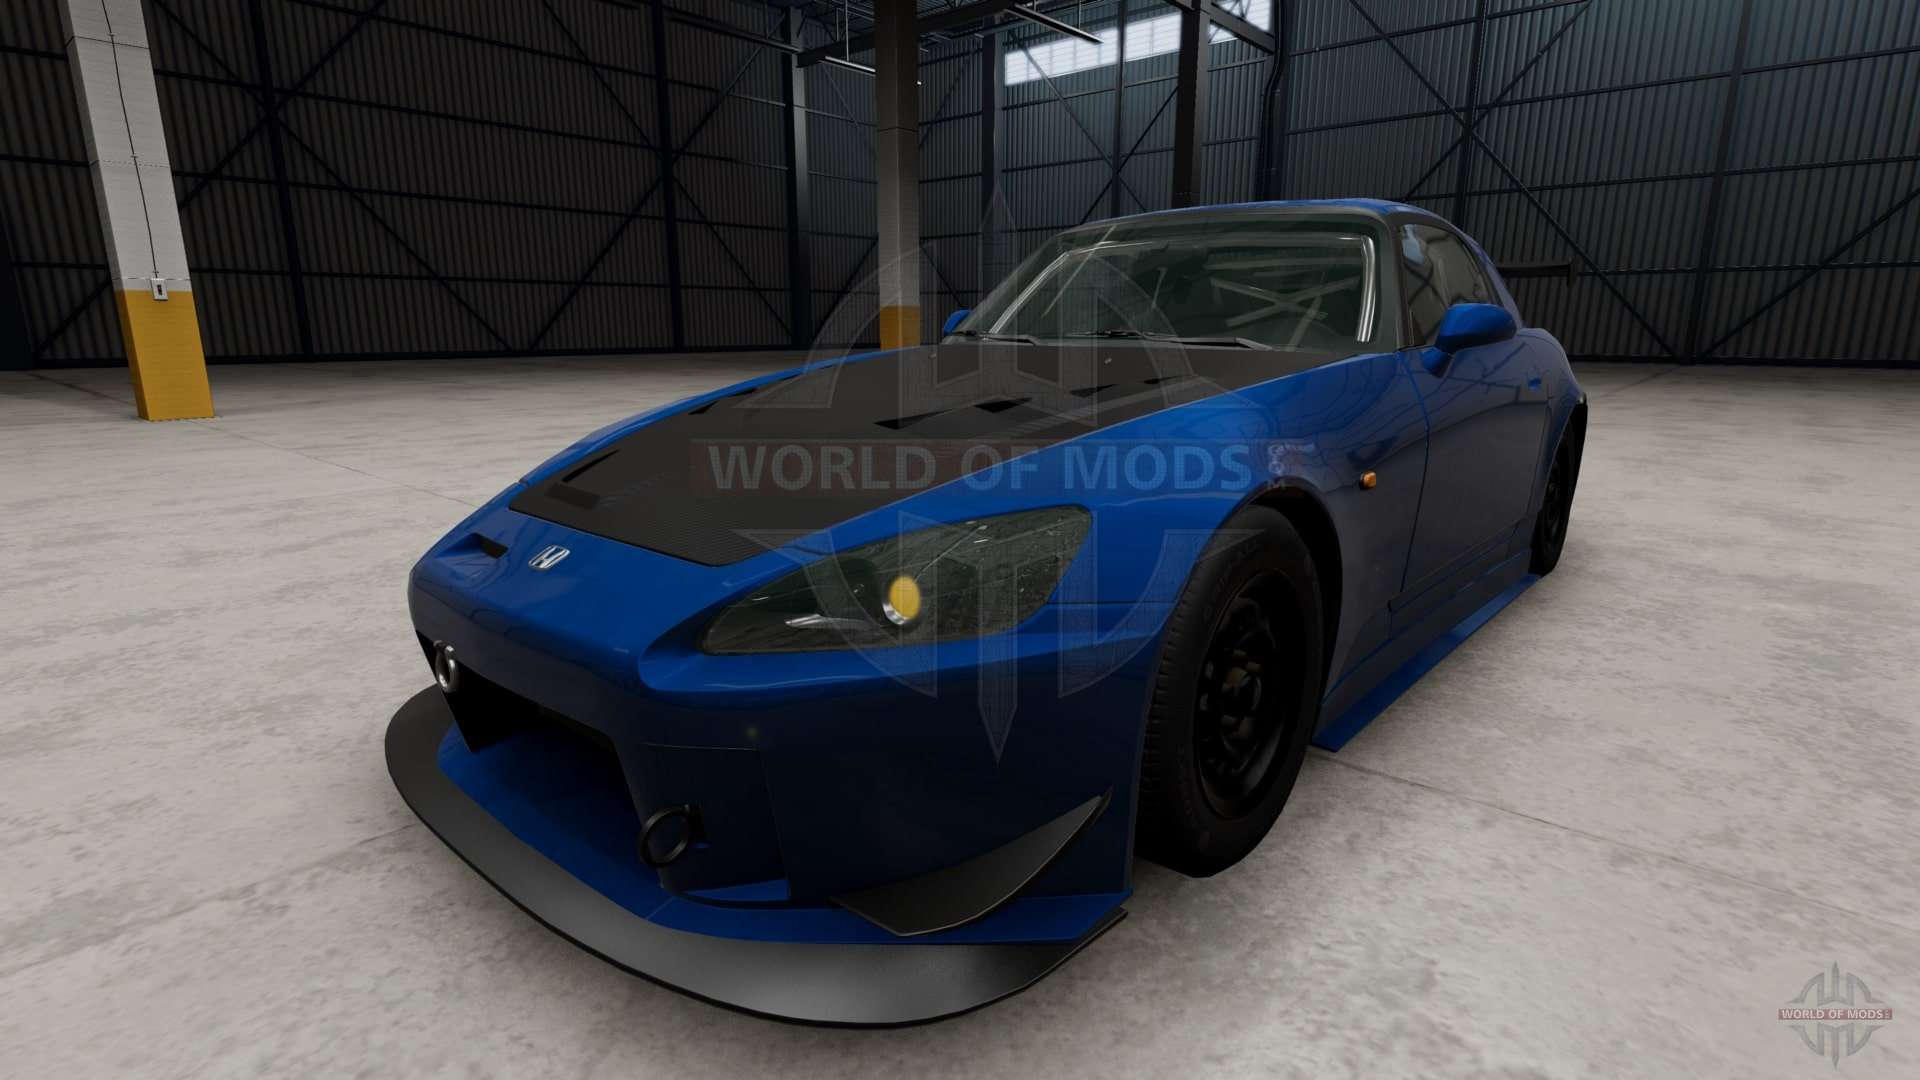 Forza Horizon 1 XE Mod v1.0 file - ModDB